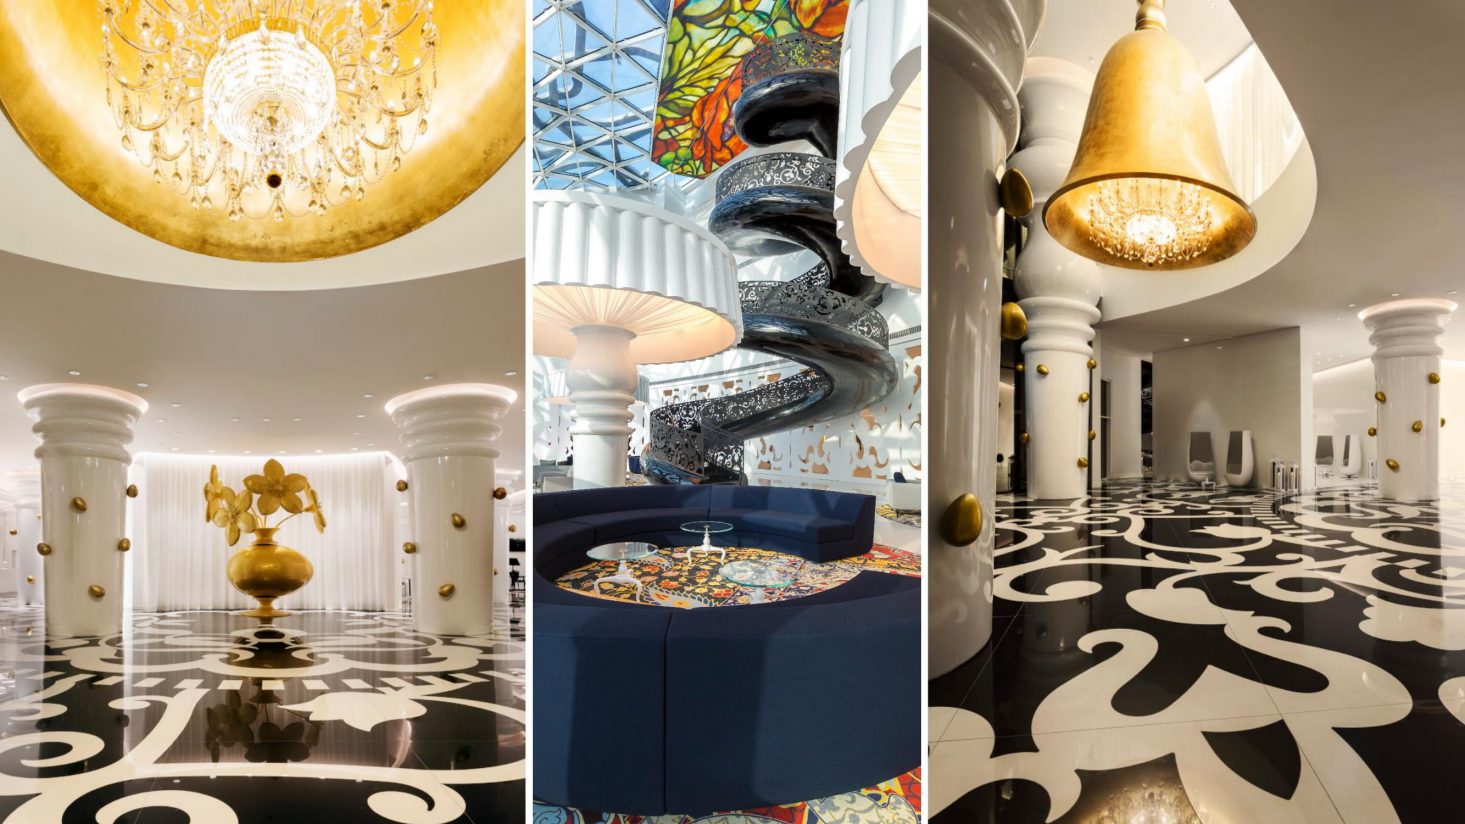 Mondrian Doha tells stories of old legends” through local design